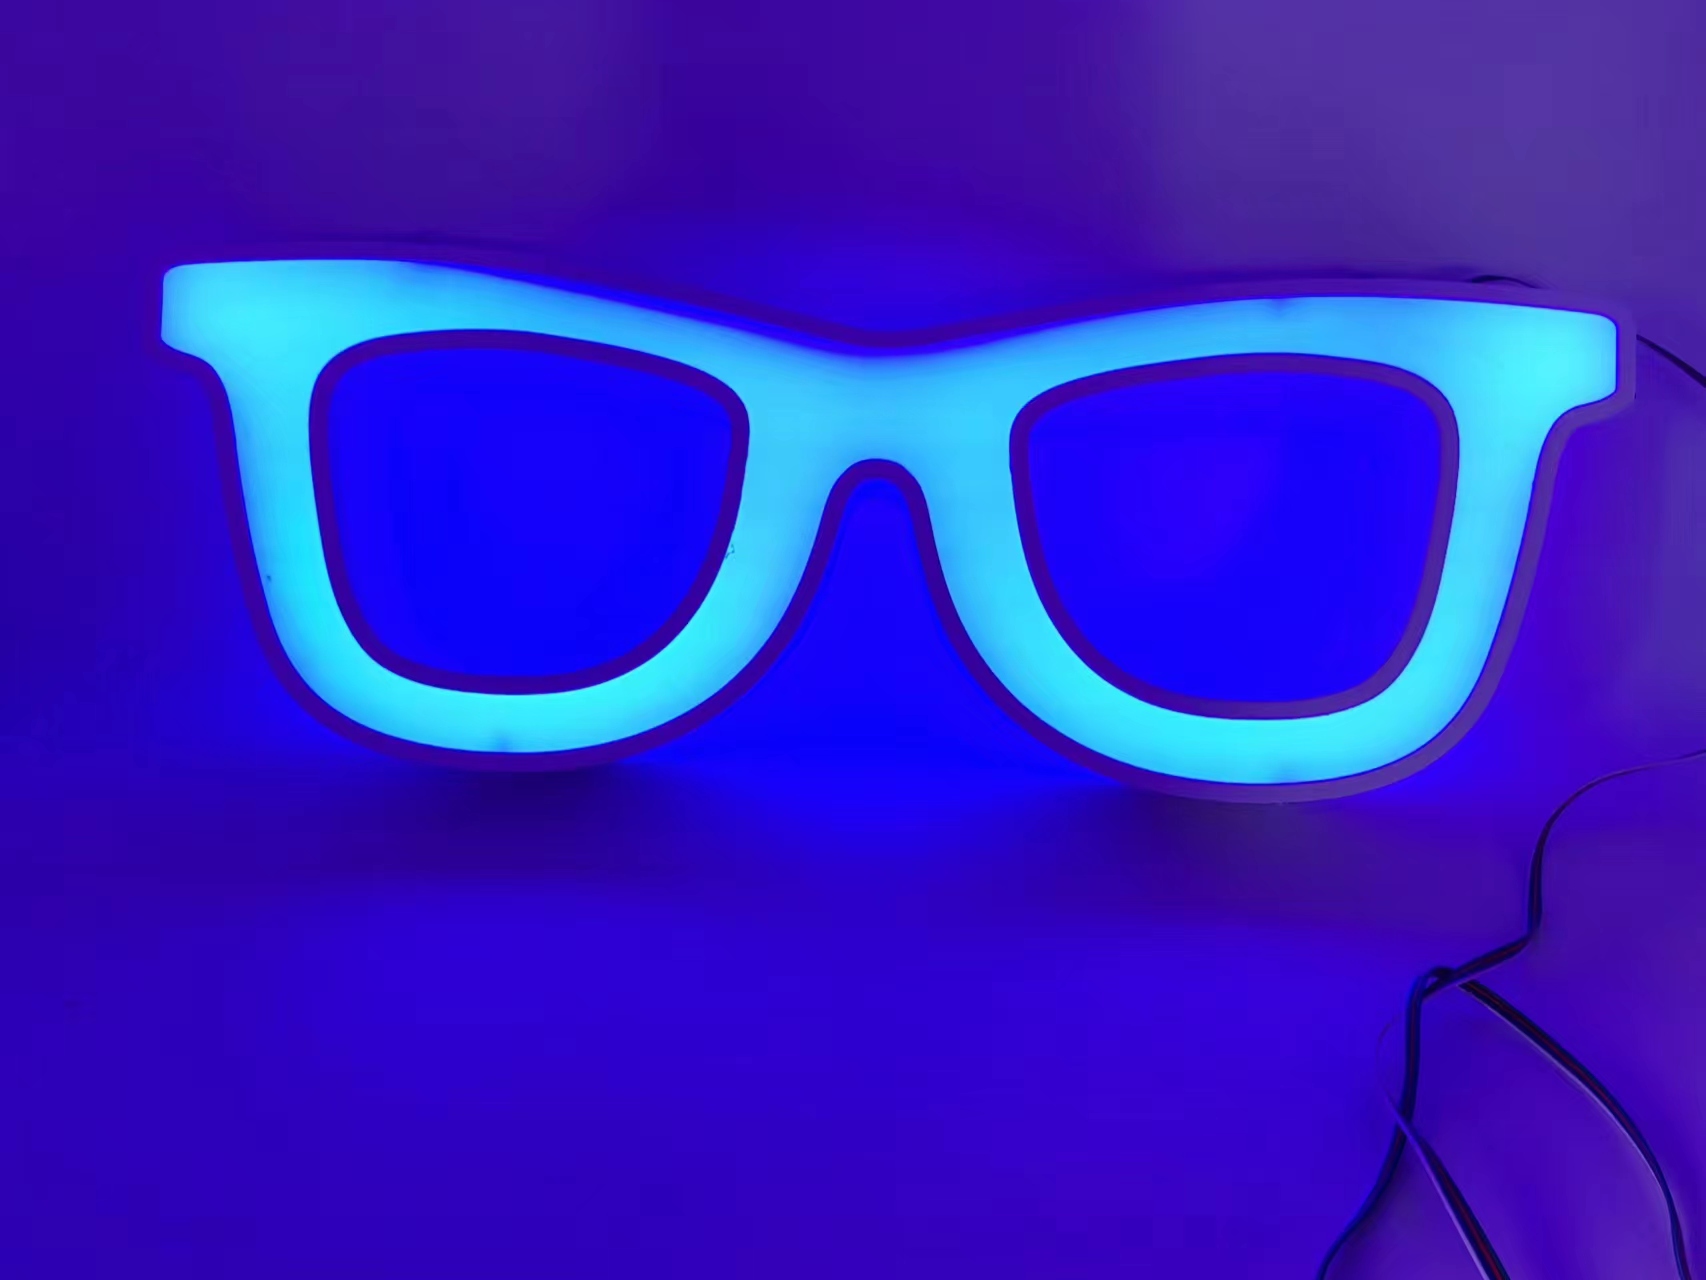 Glasses display light